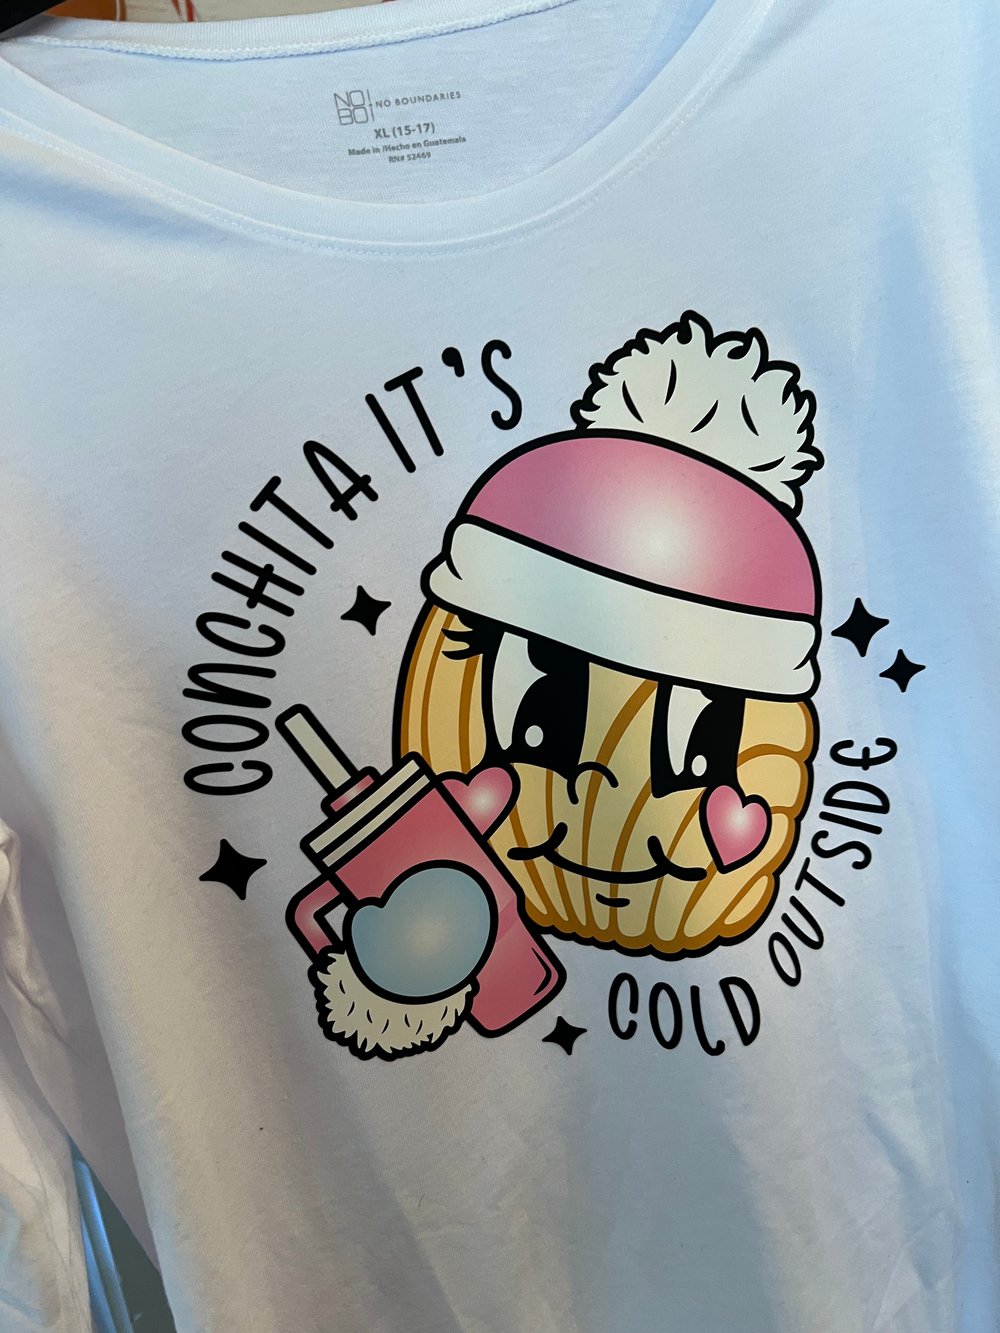 Conchita it’s cold ! T shirt shirt 